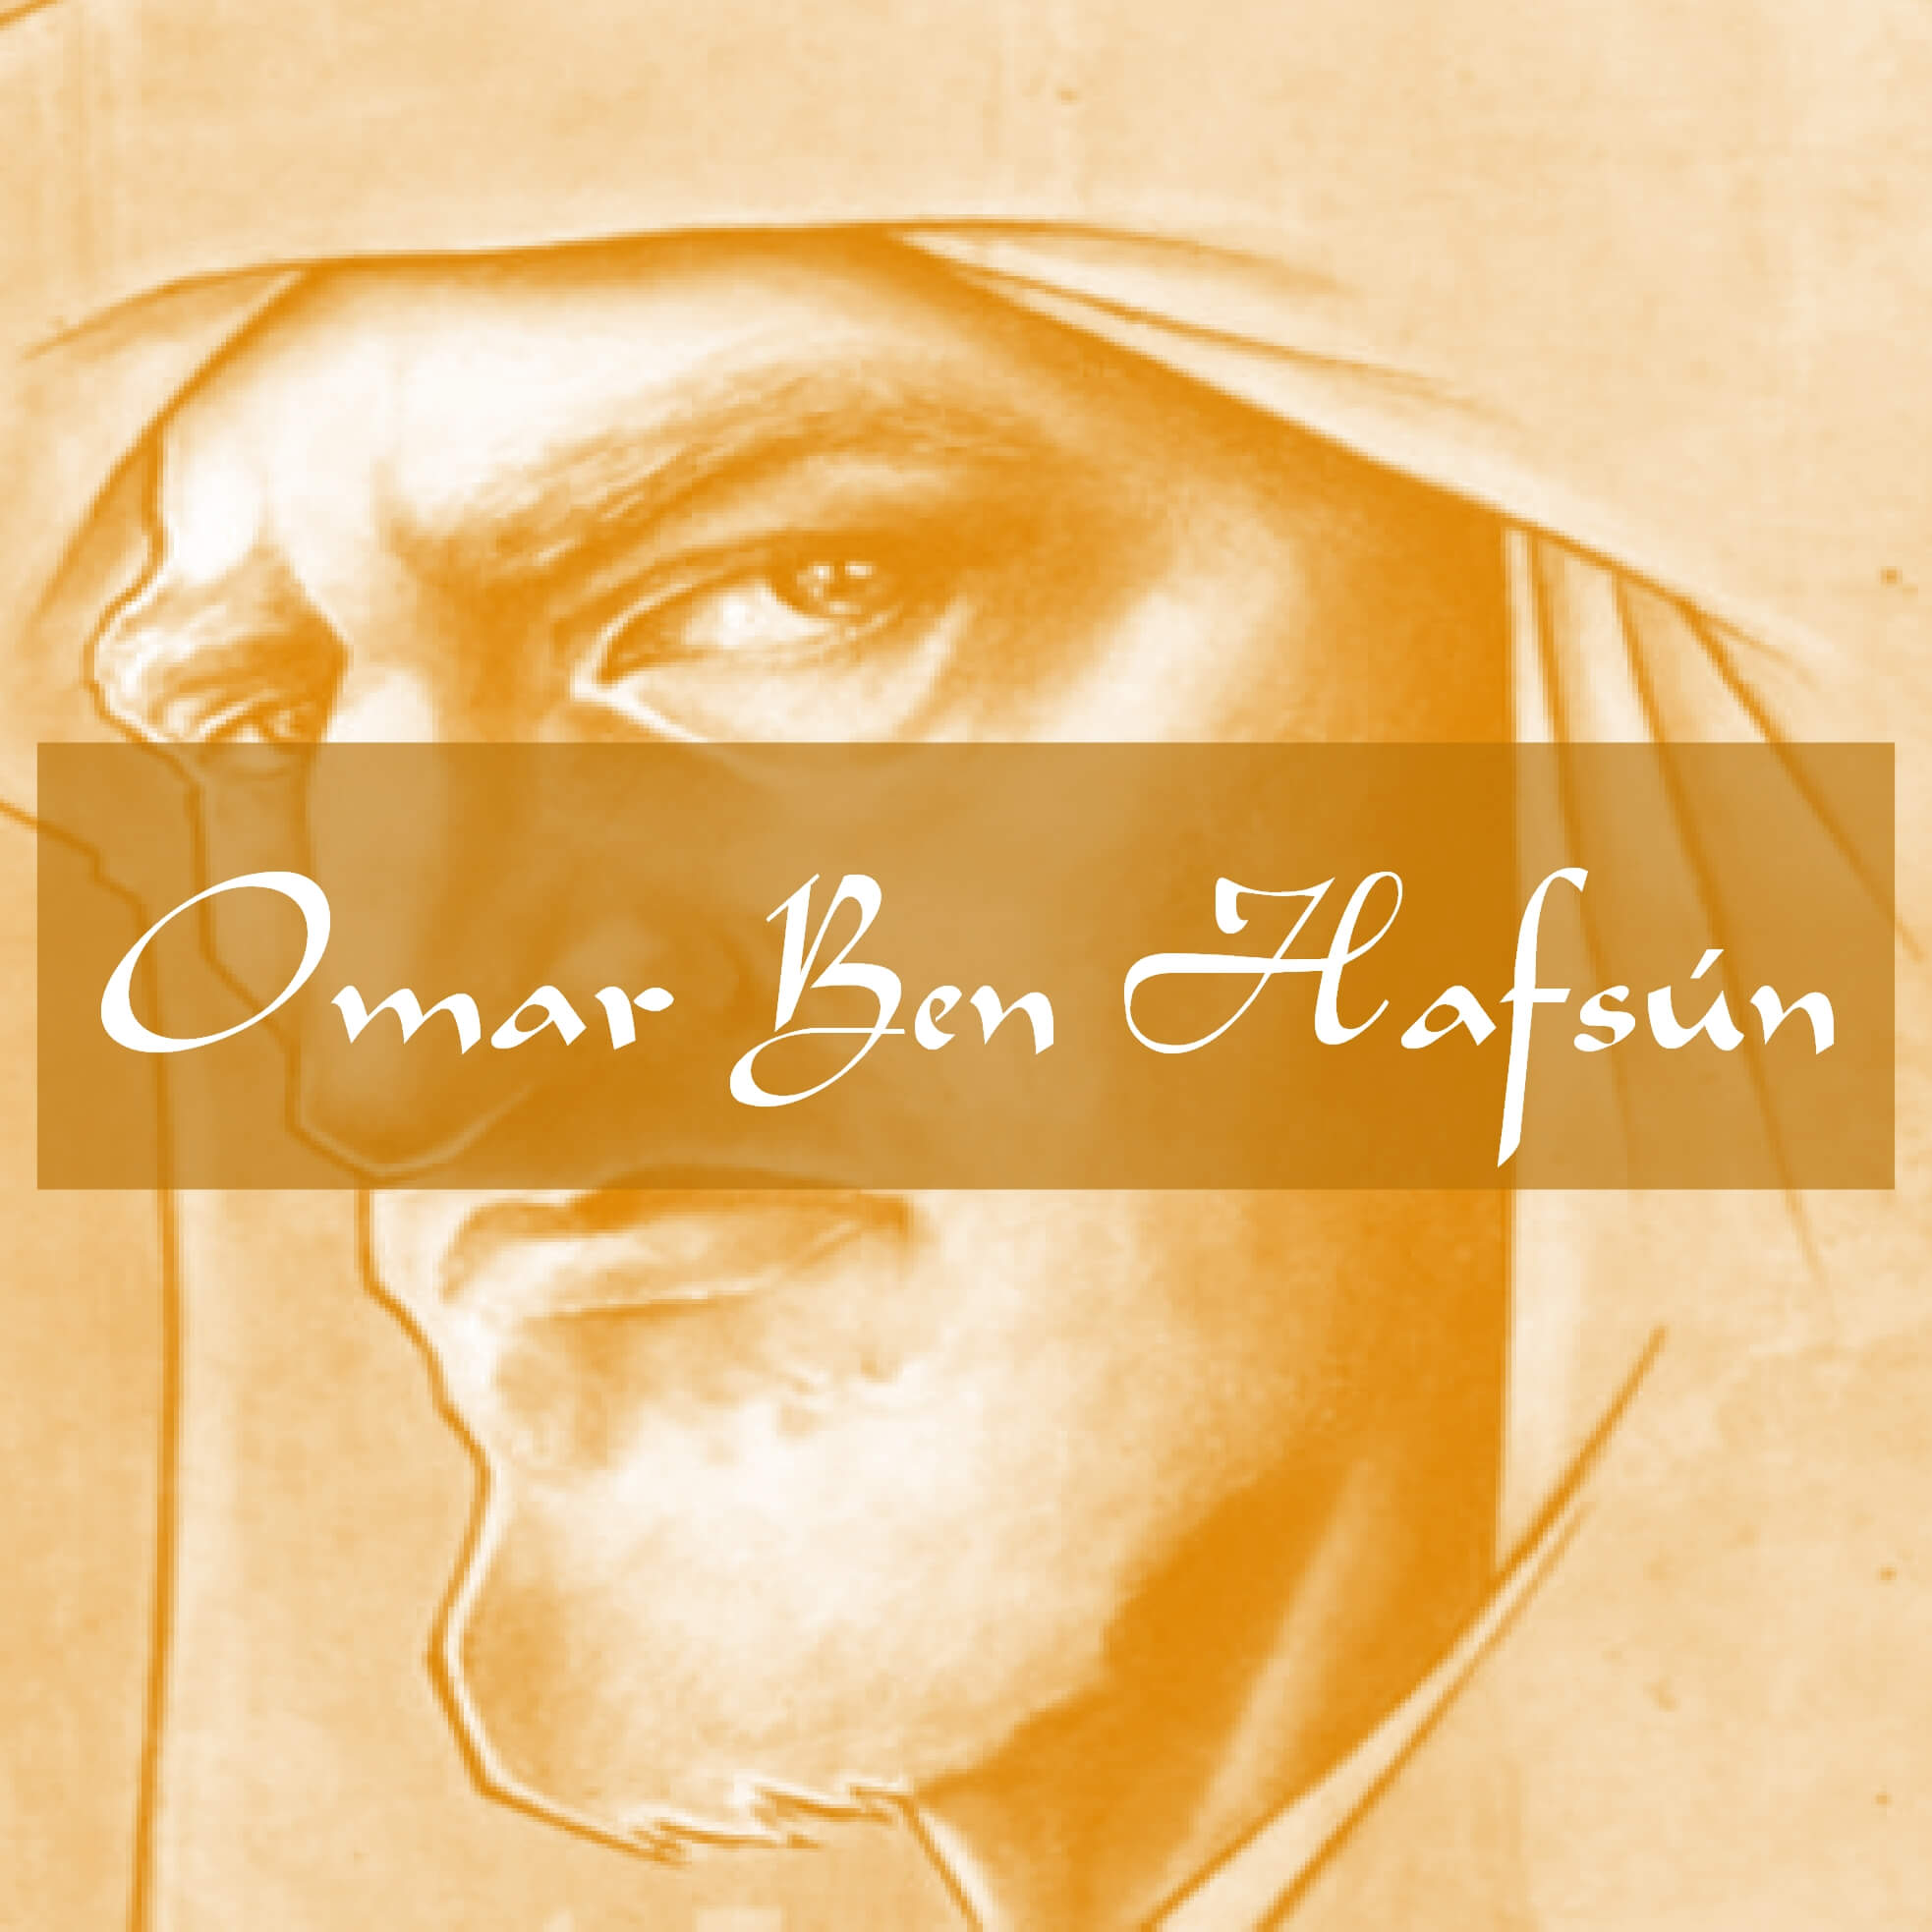 Omar Ben Hafsun Parauta Geschiedenis Malaga